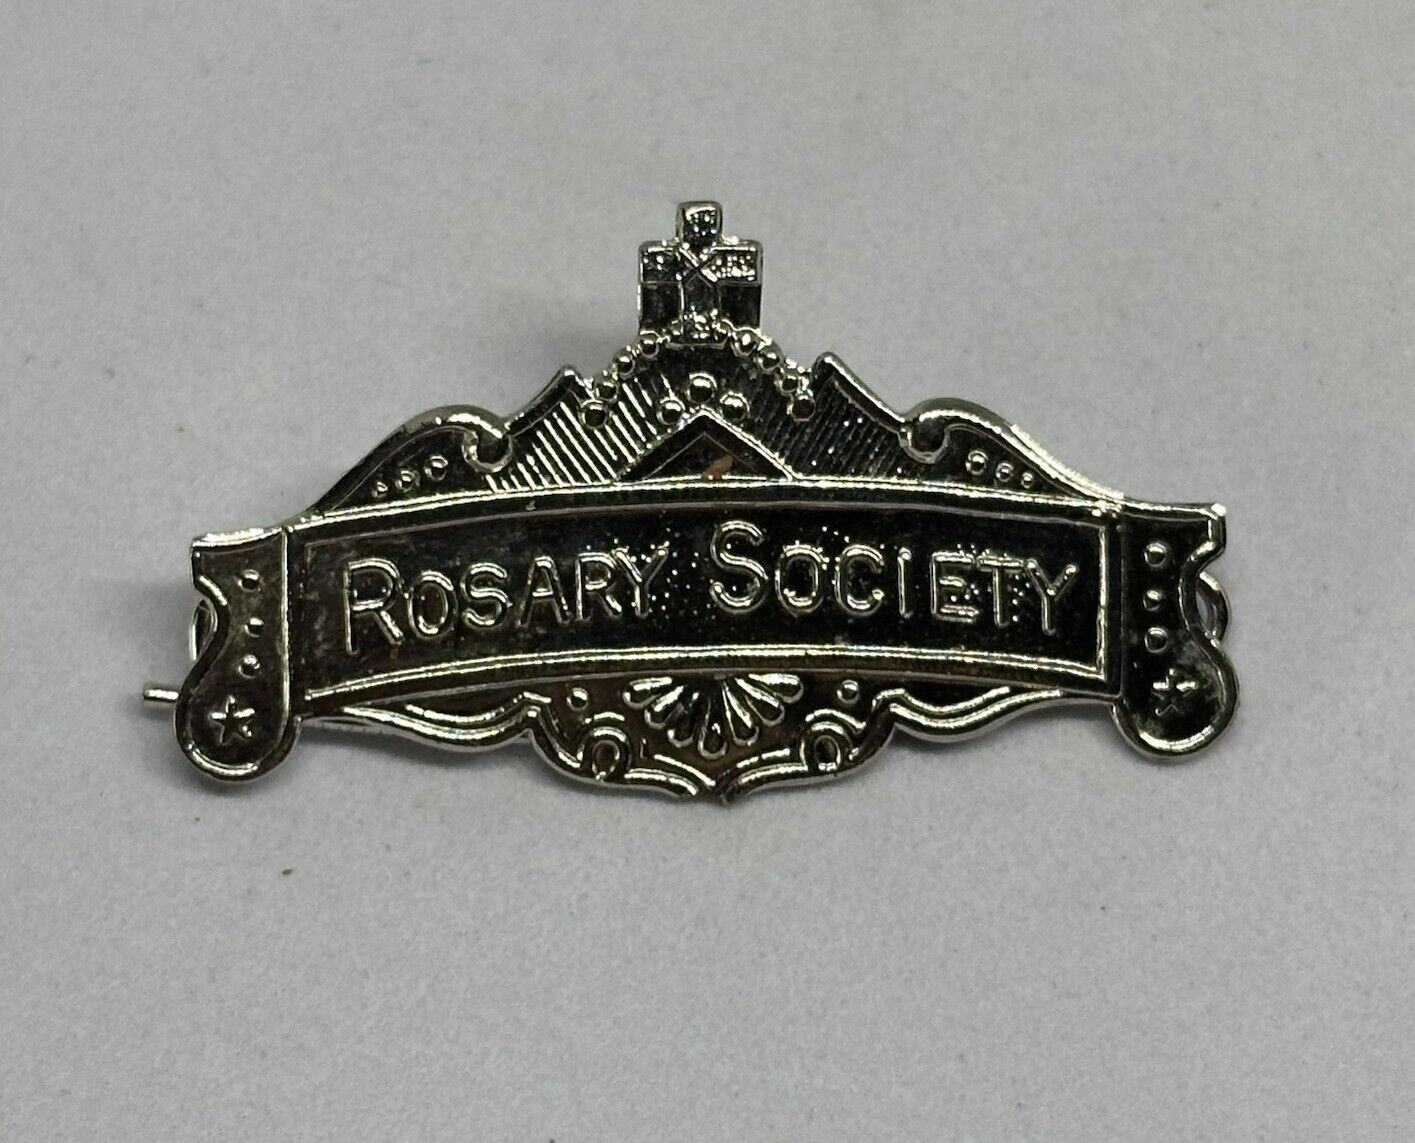 Vintage Rosary Society Medal Ribbon Holder Pin Brooch Without Any Ribbon/Medal